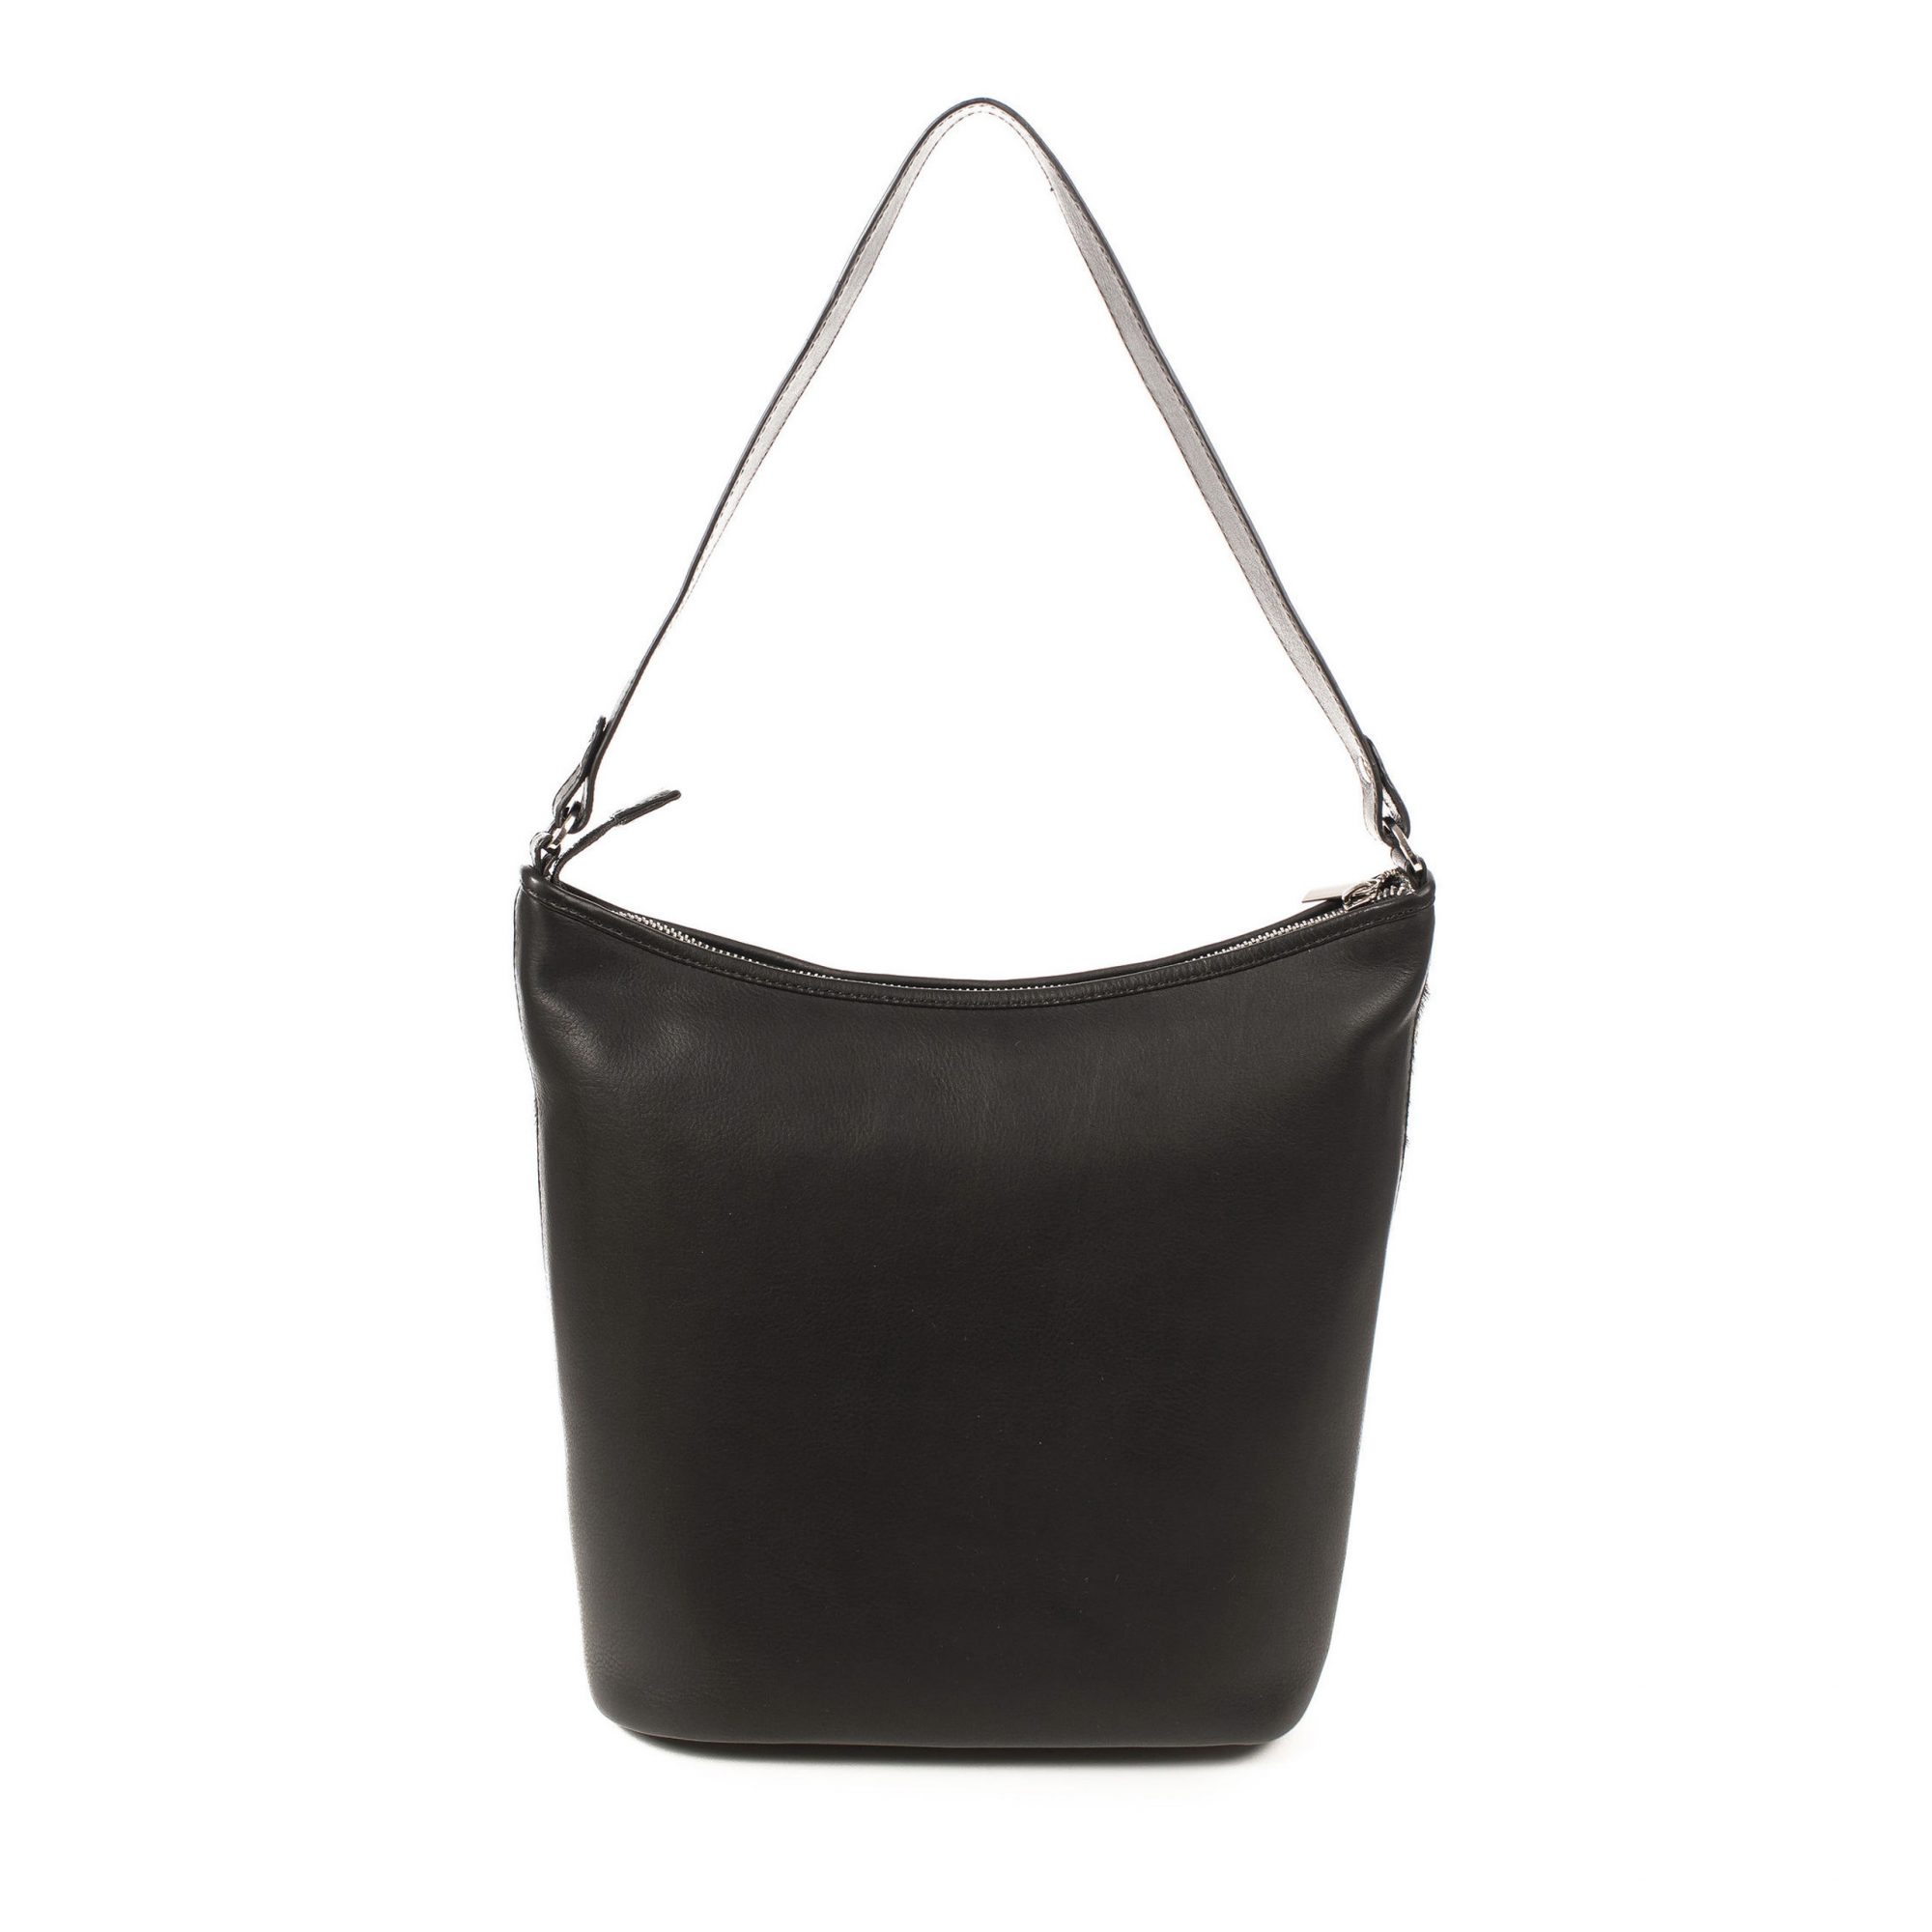 Anastasia hobo bag in luxury soft black leather